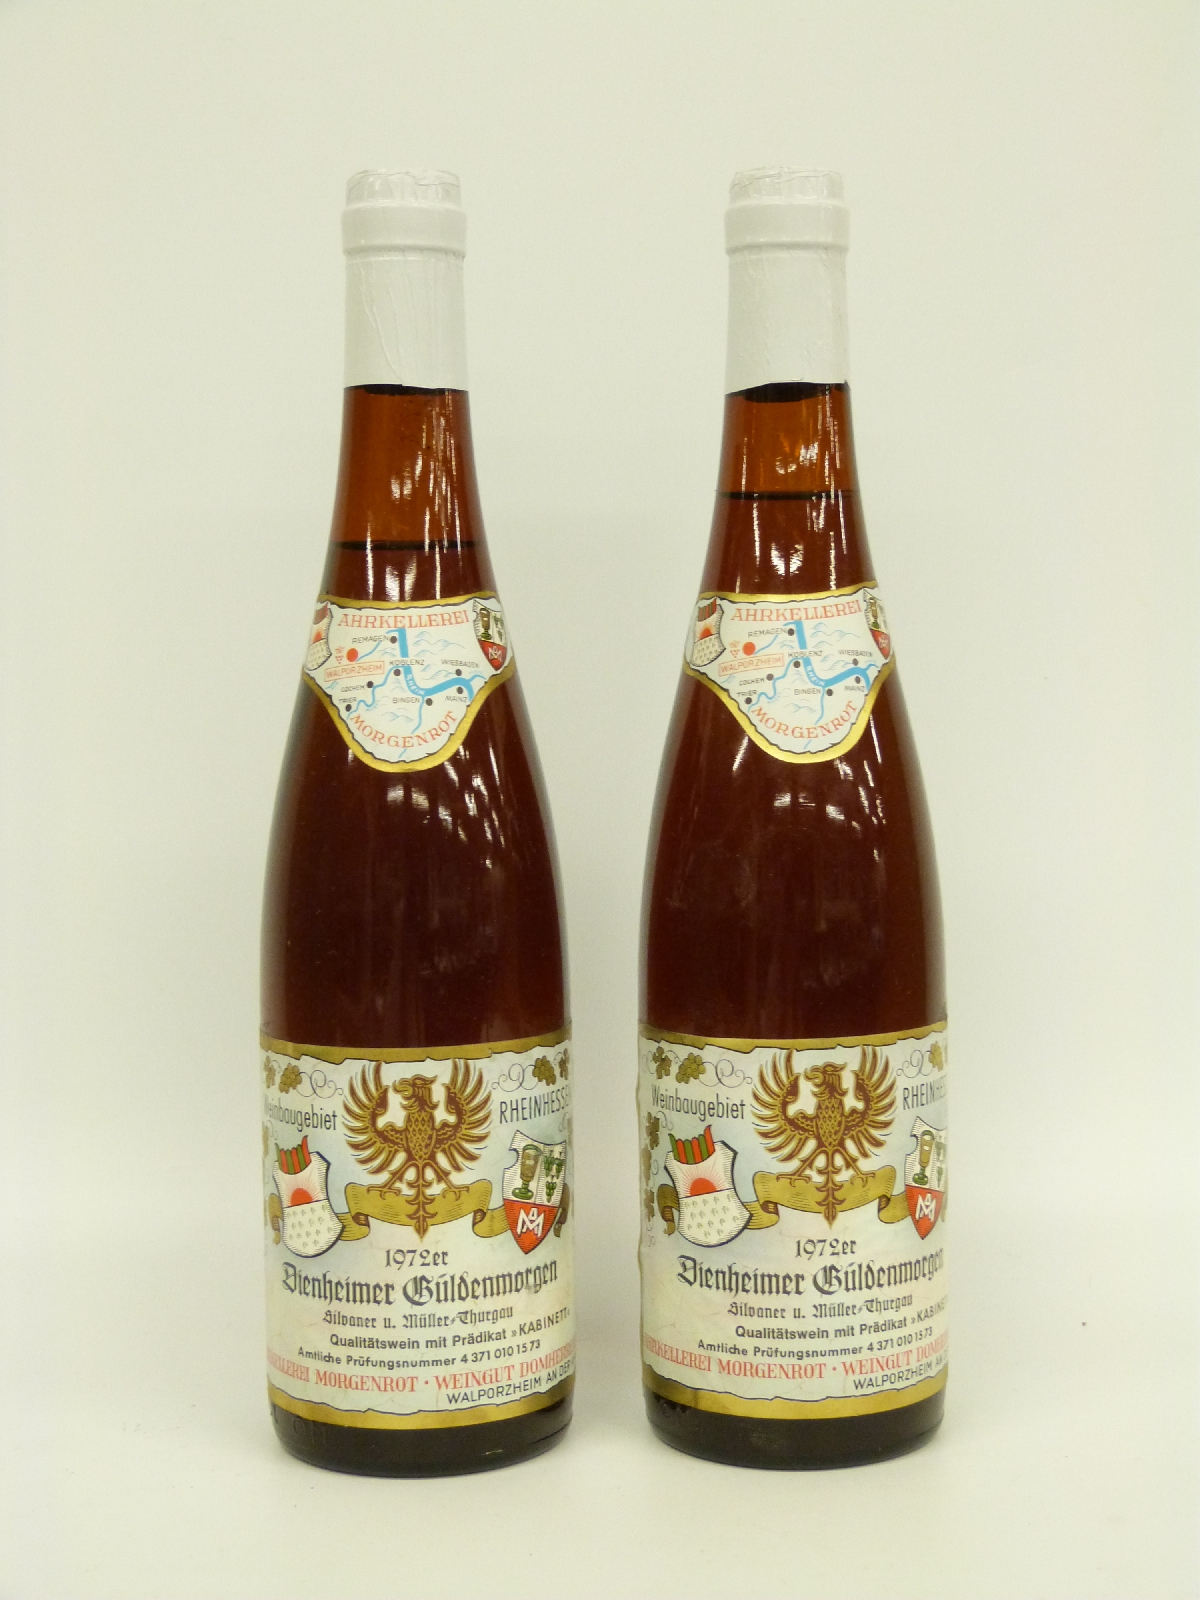 Dienheimer Guldenmorgen 1972 pair of boxed bottles of wine - Image 2 of 2